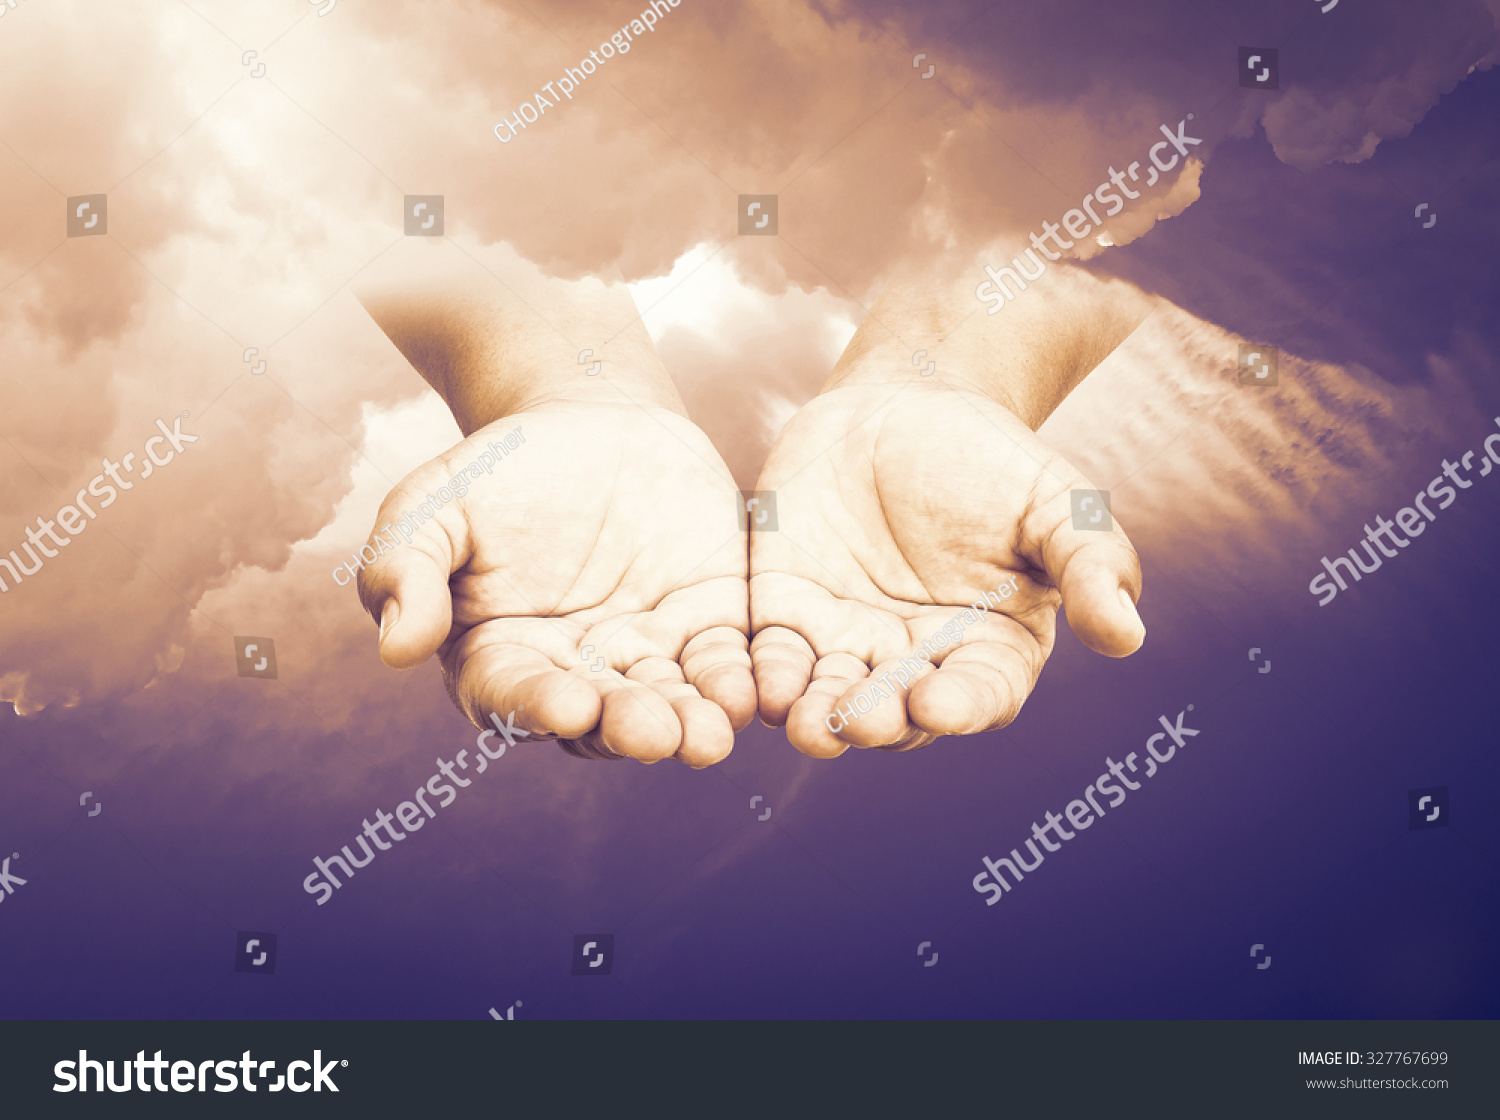 Mercy Hand God Concept Jesus Christ Stock Photo 327767699 - Shutterstock